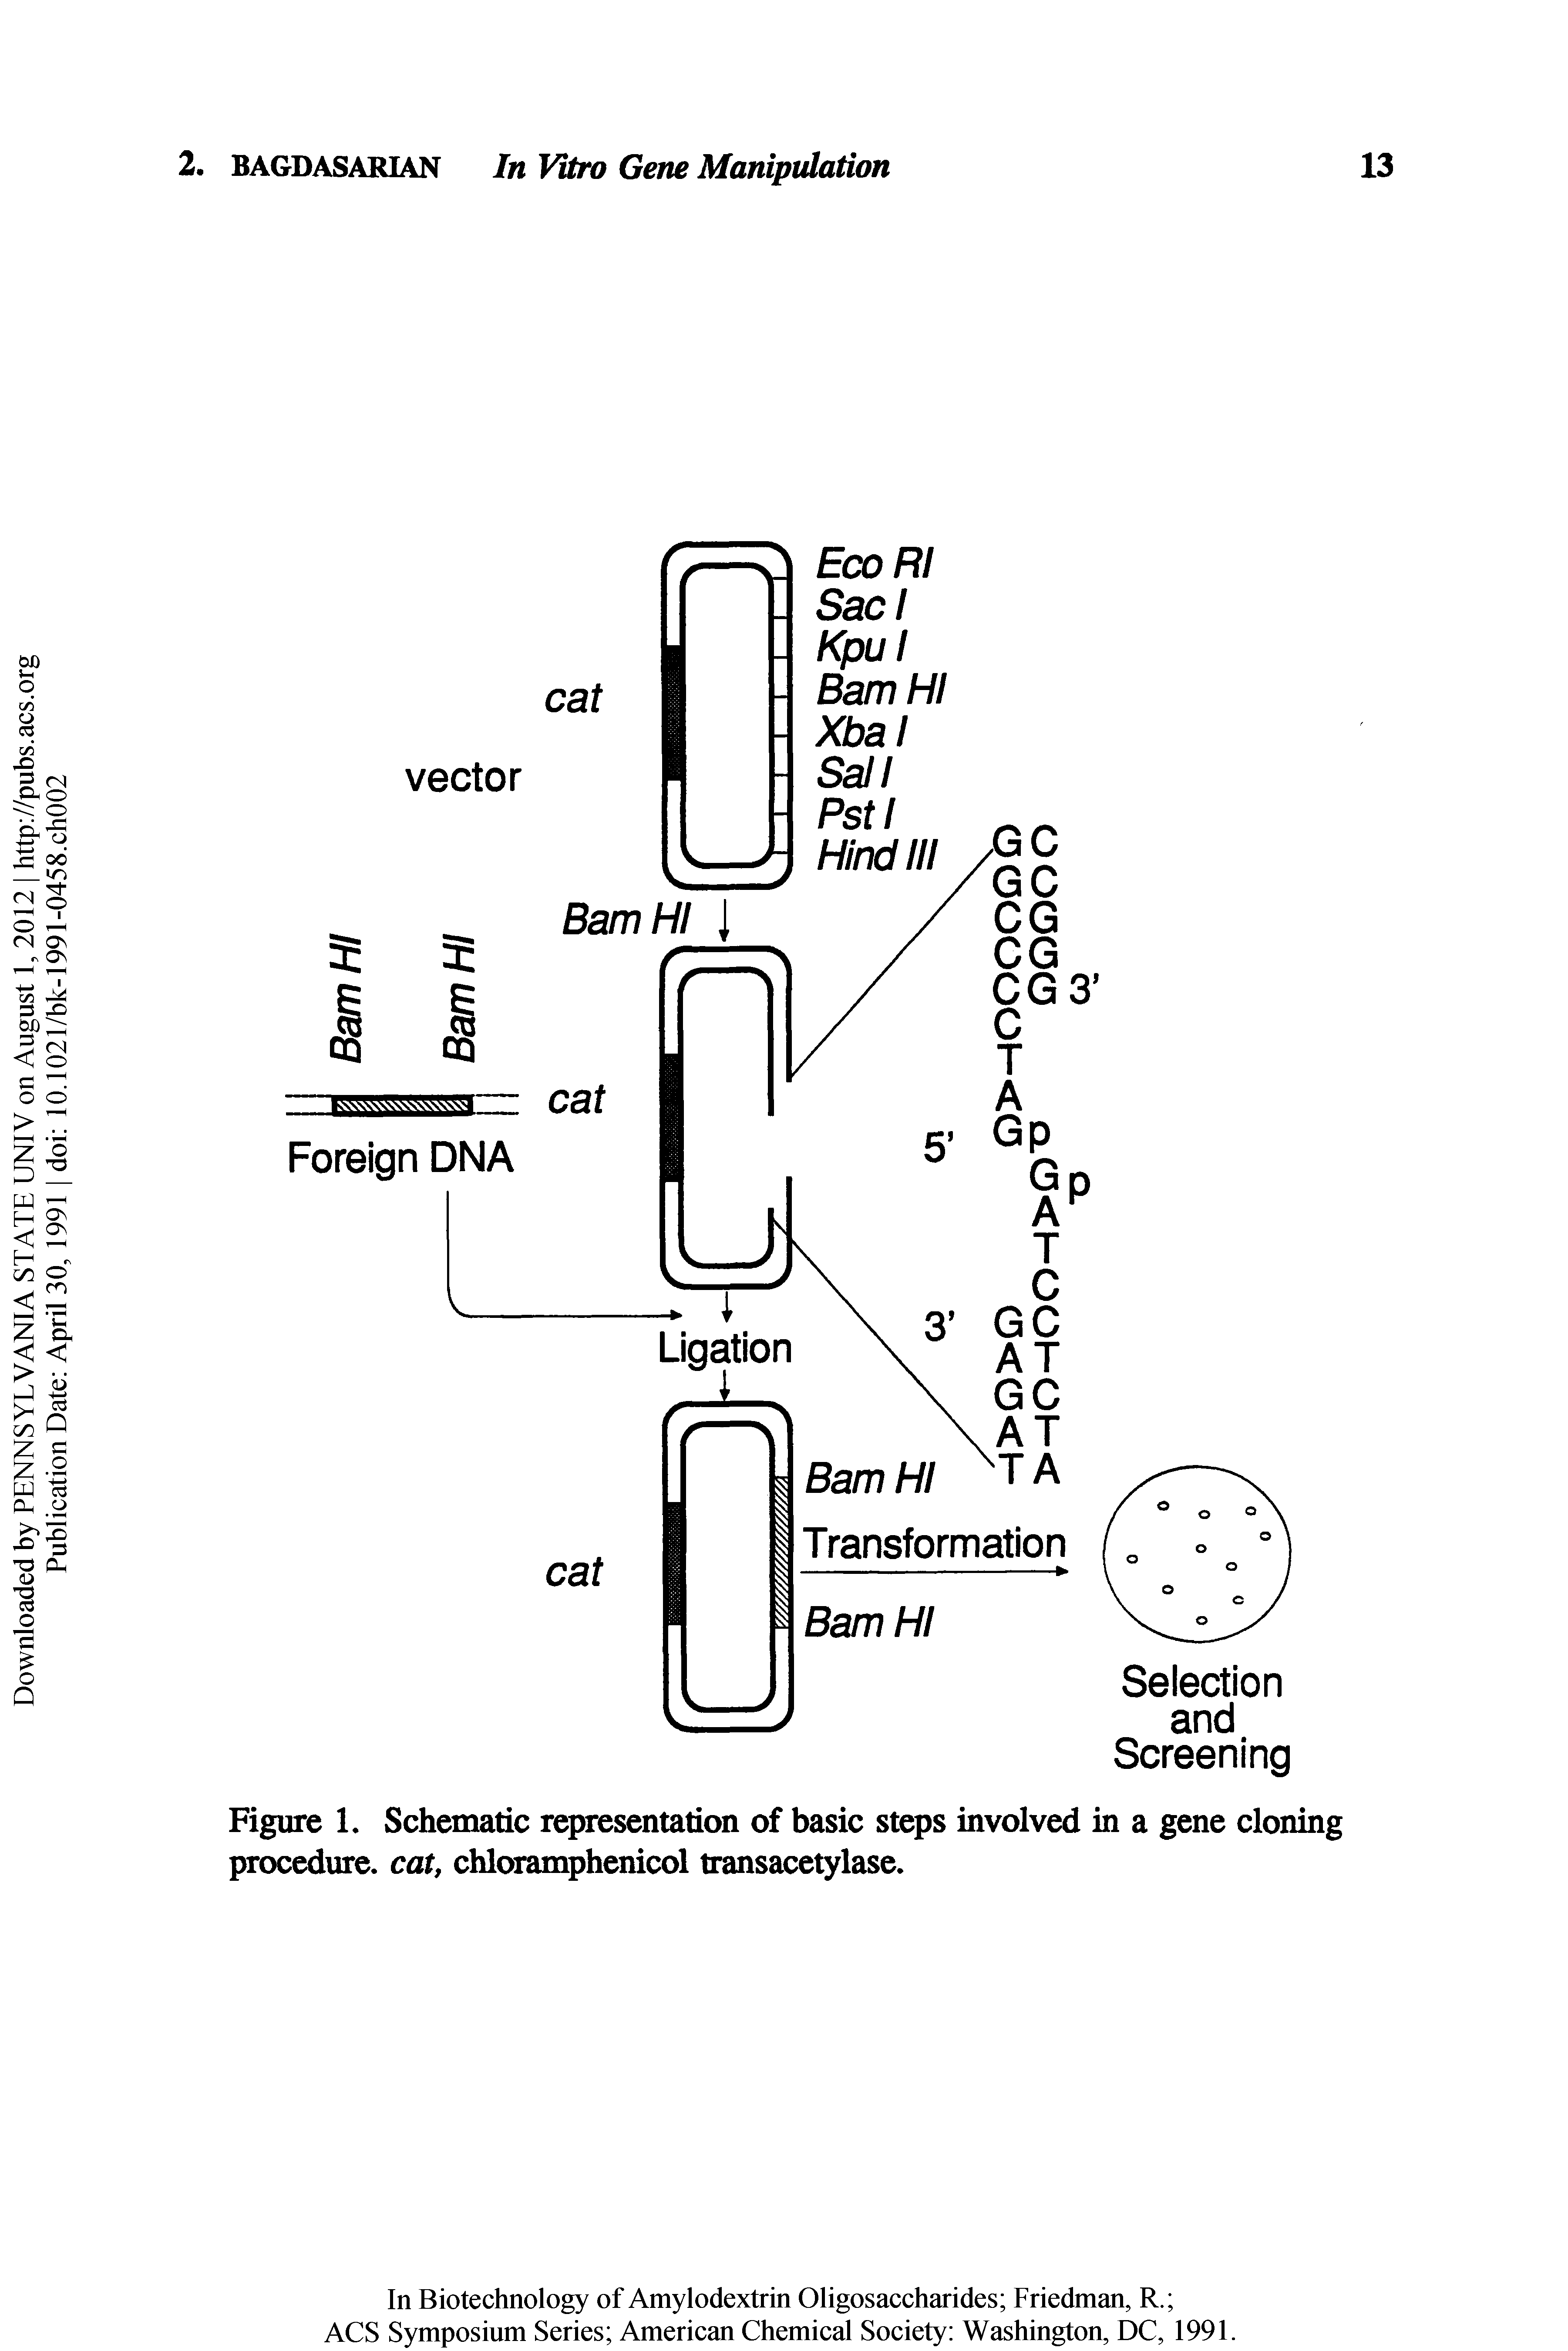 Figure 1. Schematic representation of basic steps involved in a gene cloning procedure, cat, chloramphenicol transacetylase.